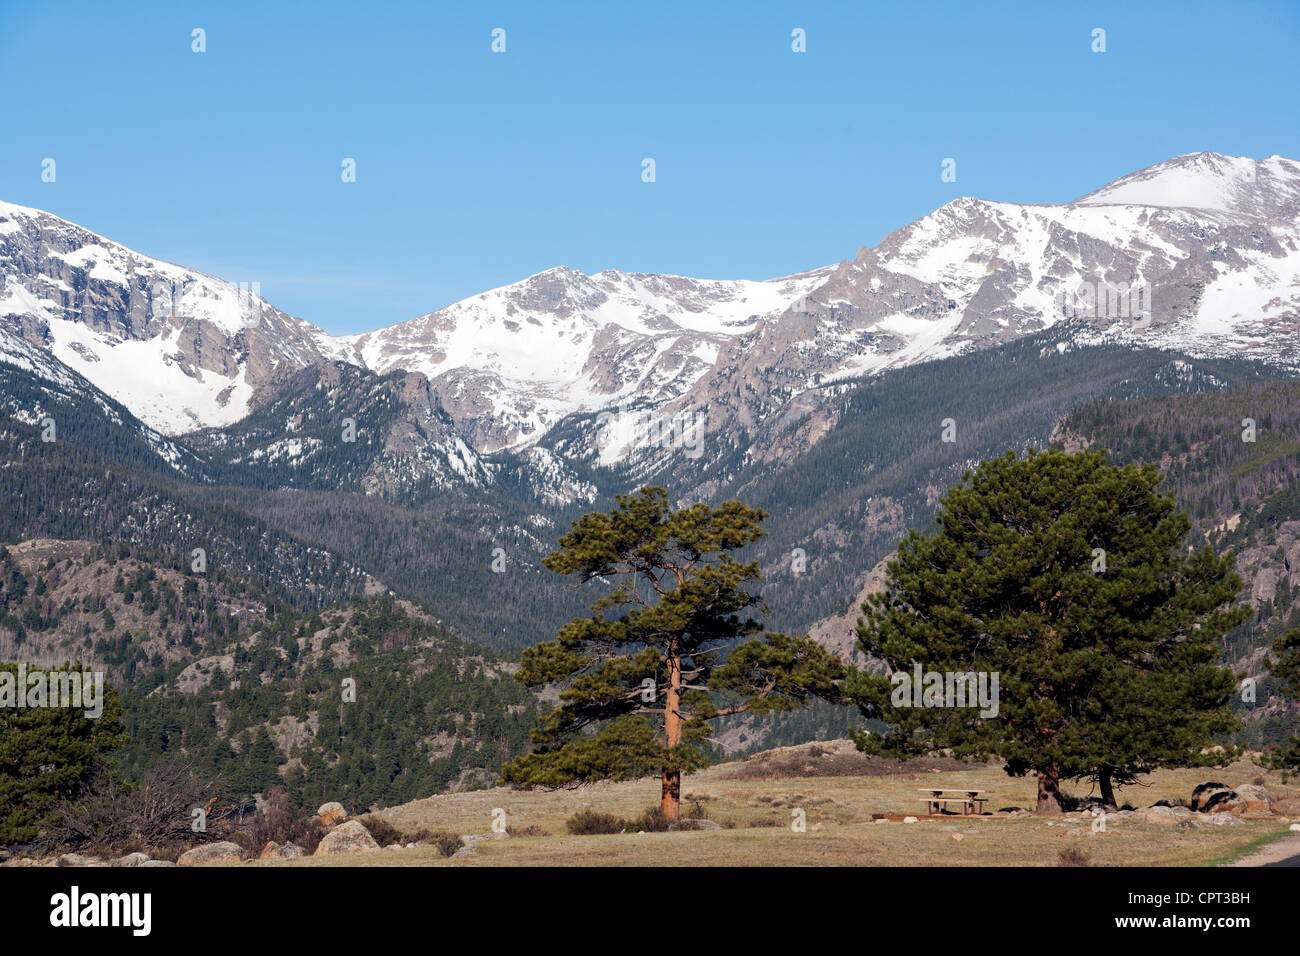 Picknickplatz in Rocky Mountain Nationalpark - Estes Park, Colorado, USA Stockfoto